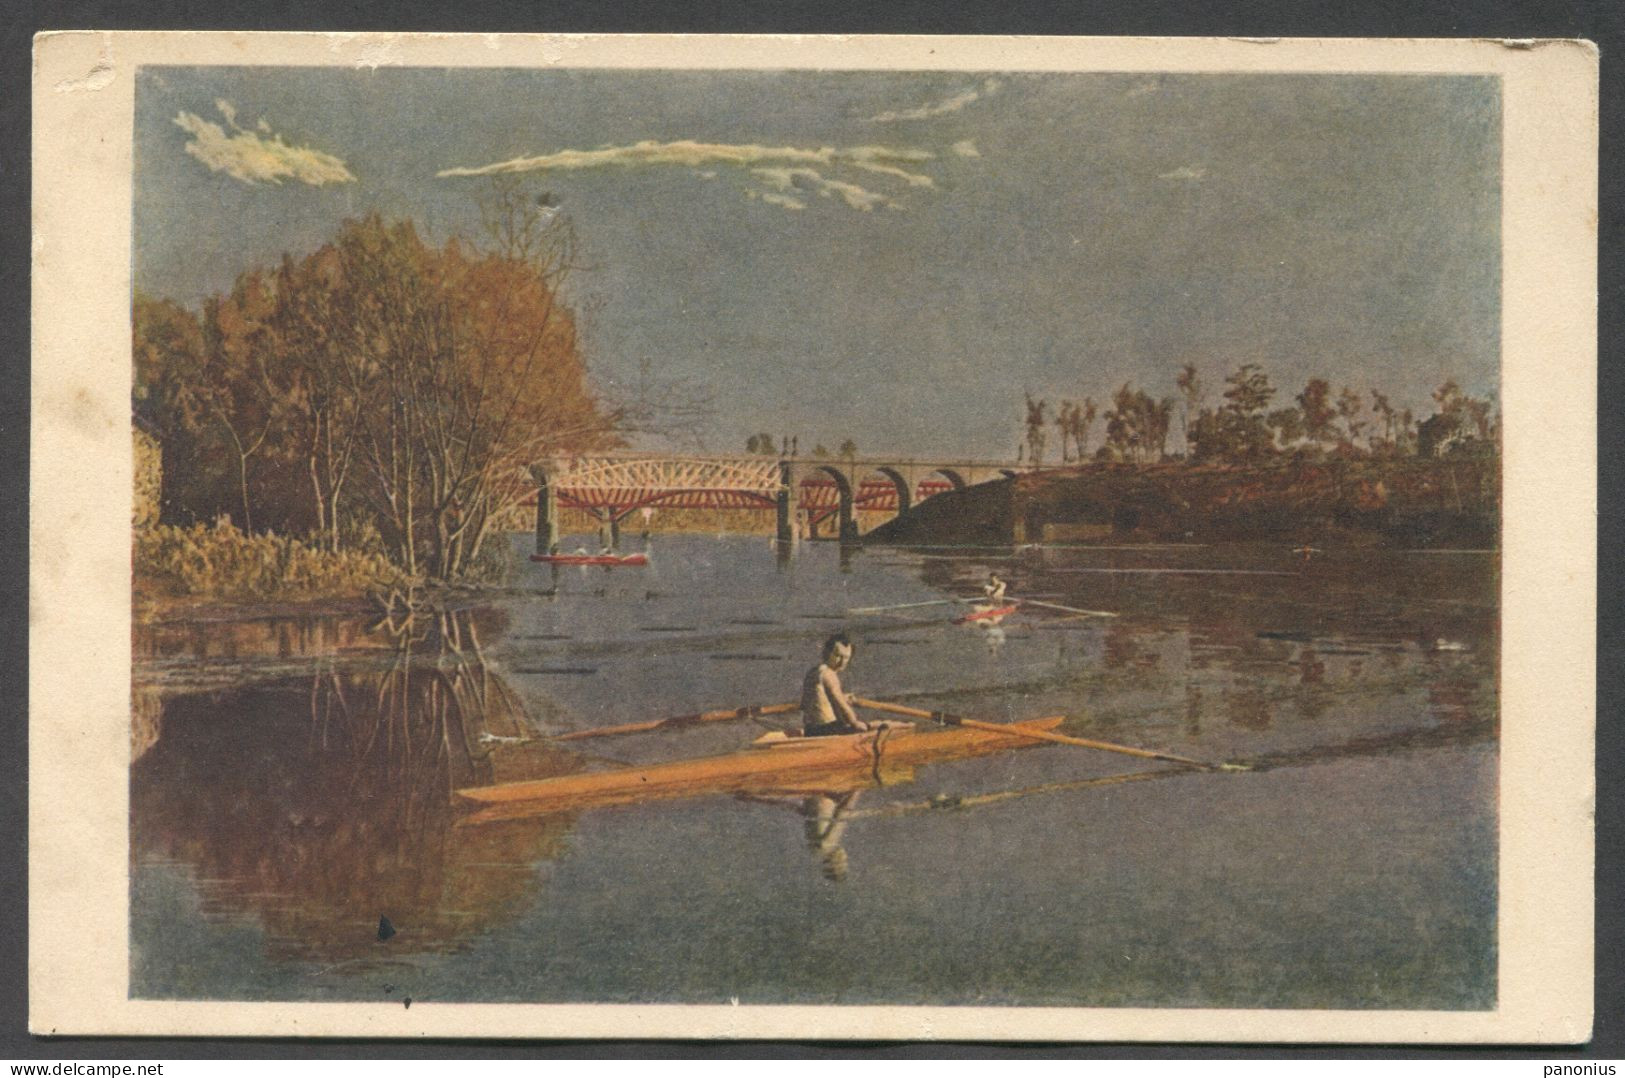 Rowing Kayak Canoe - Max Schmitt In A Single Scull By T. Eakins - Rowing